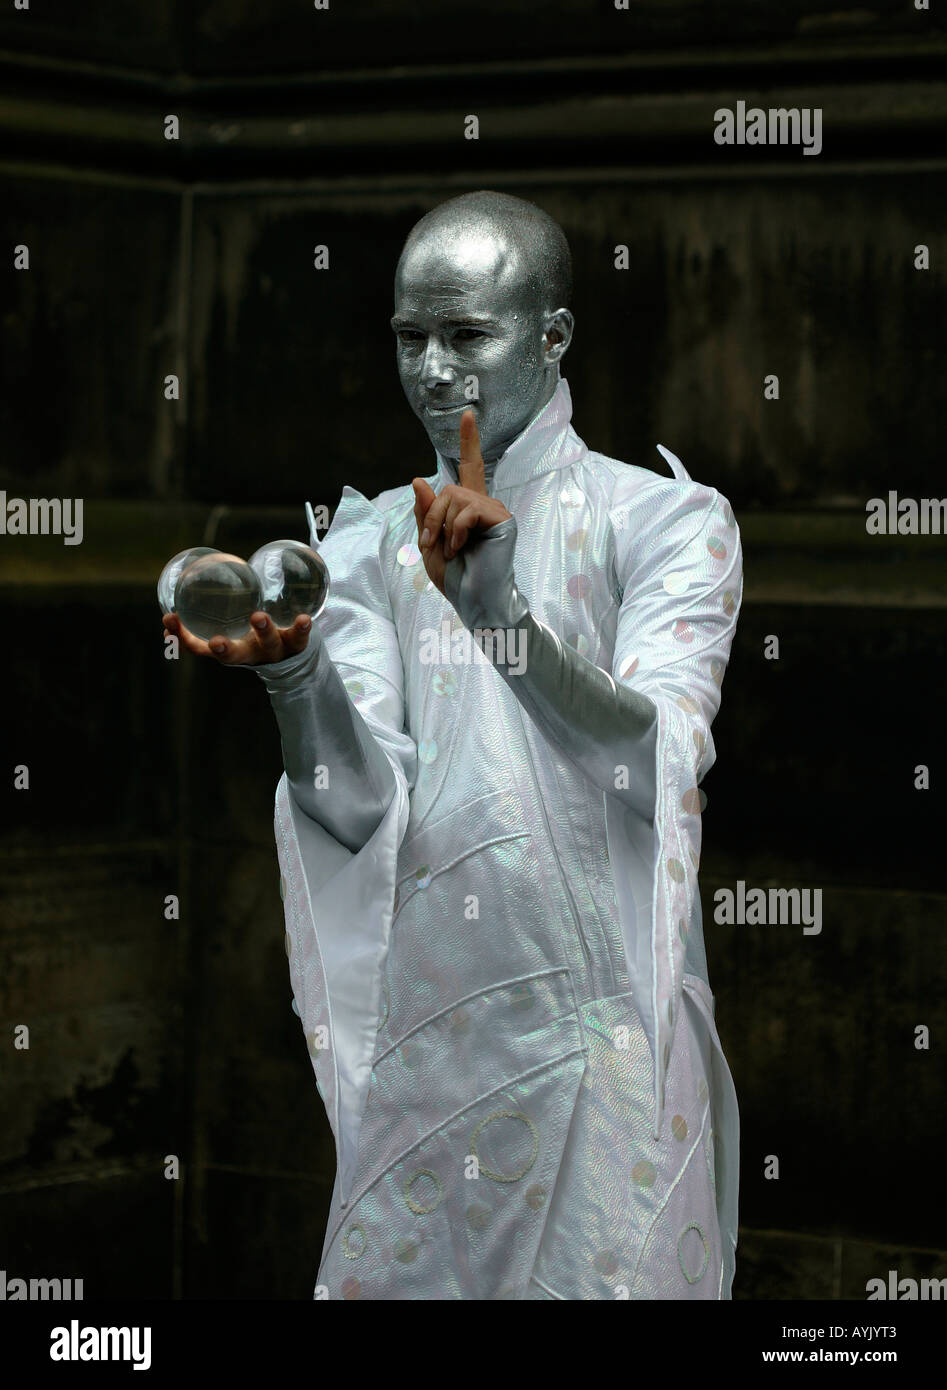 Male Street Performer dressed in silver entertaining with crystal balls Edinburgh Fringe Festival, Scotland Stock Photo